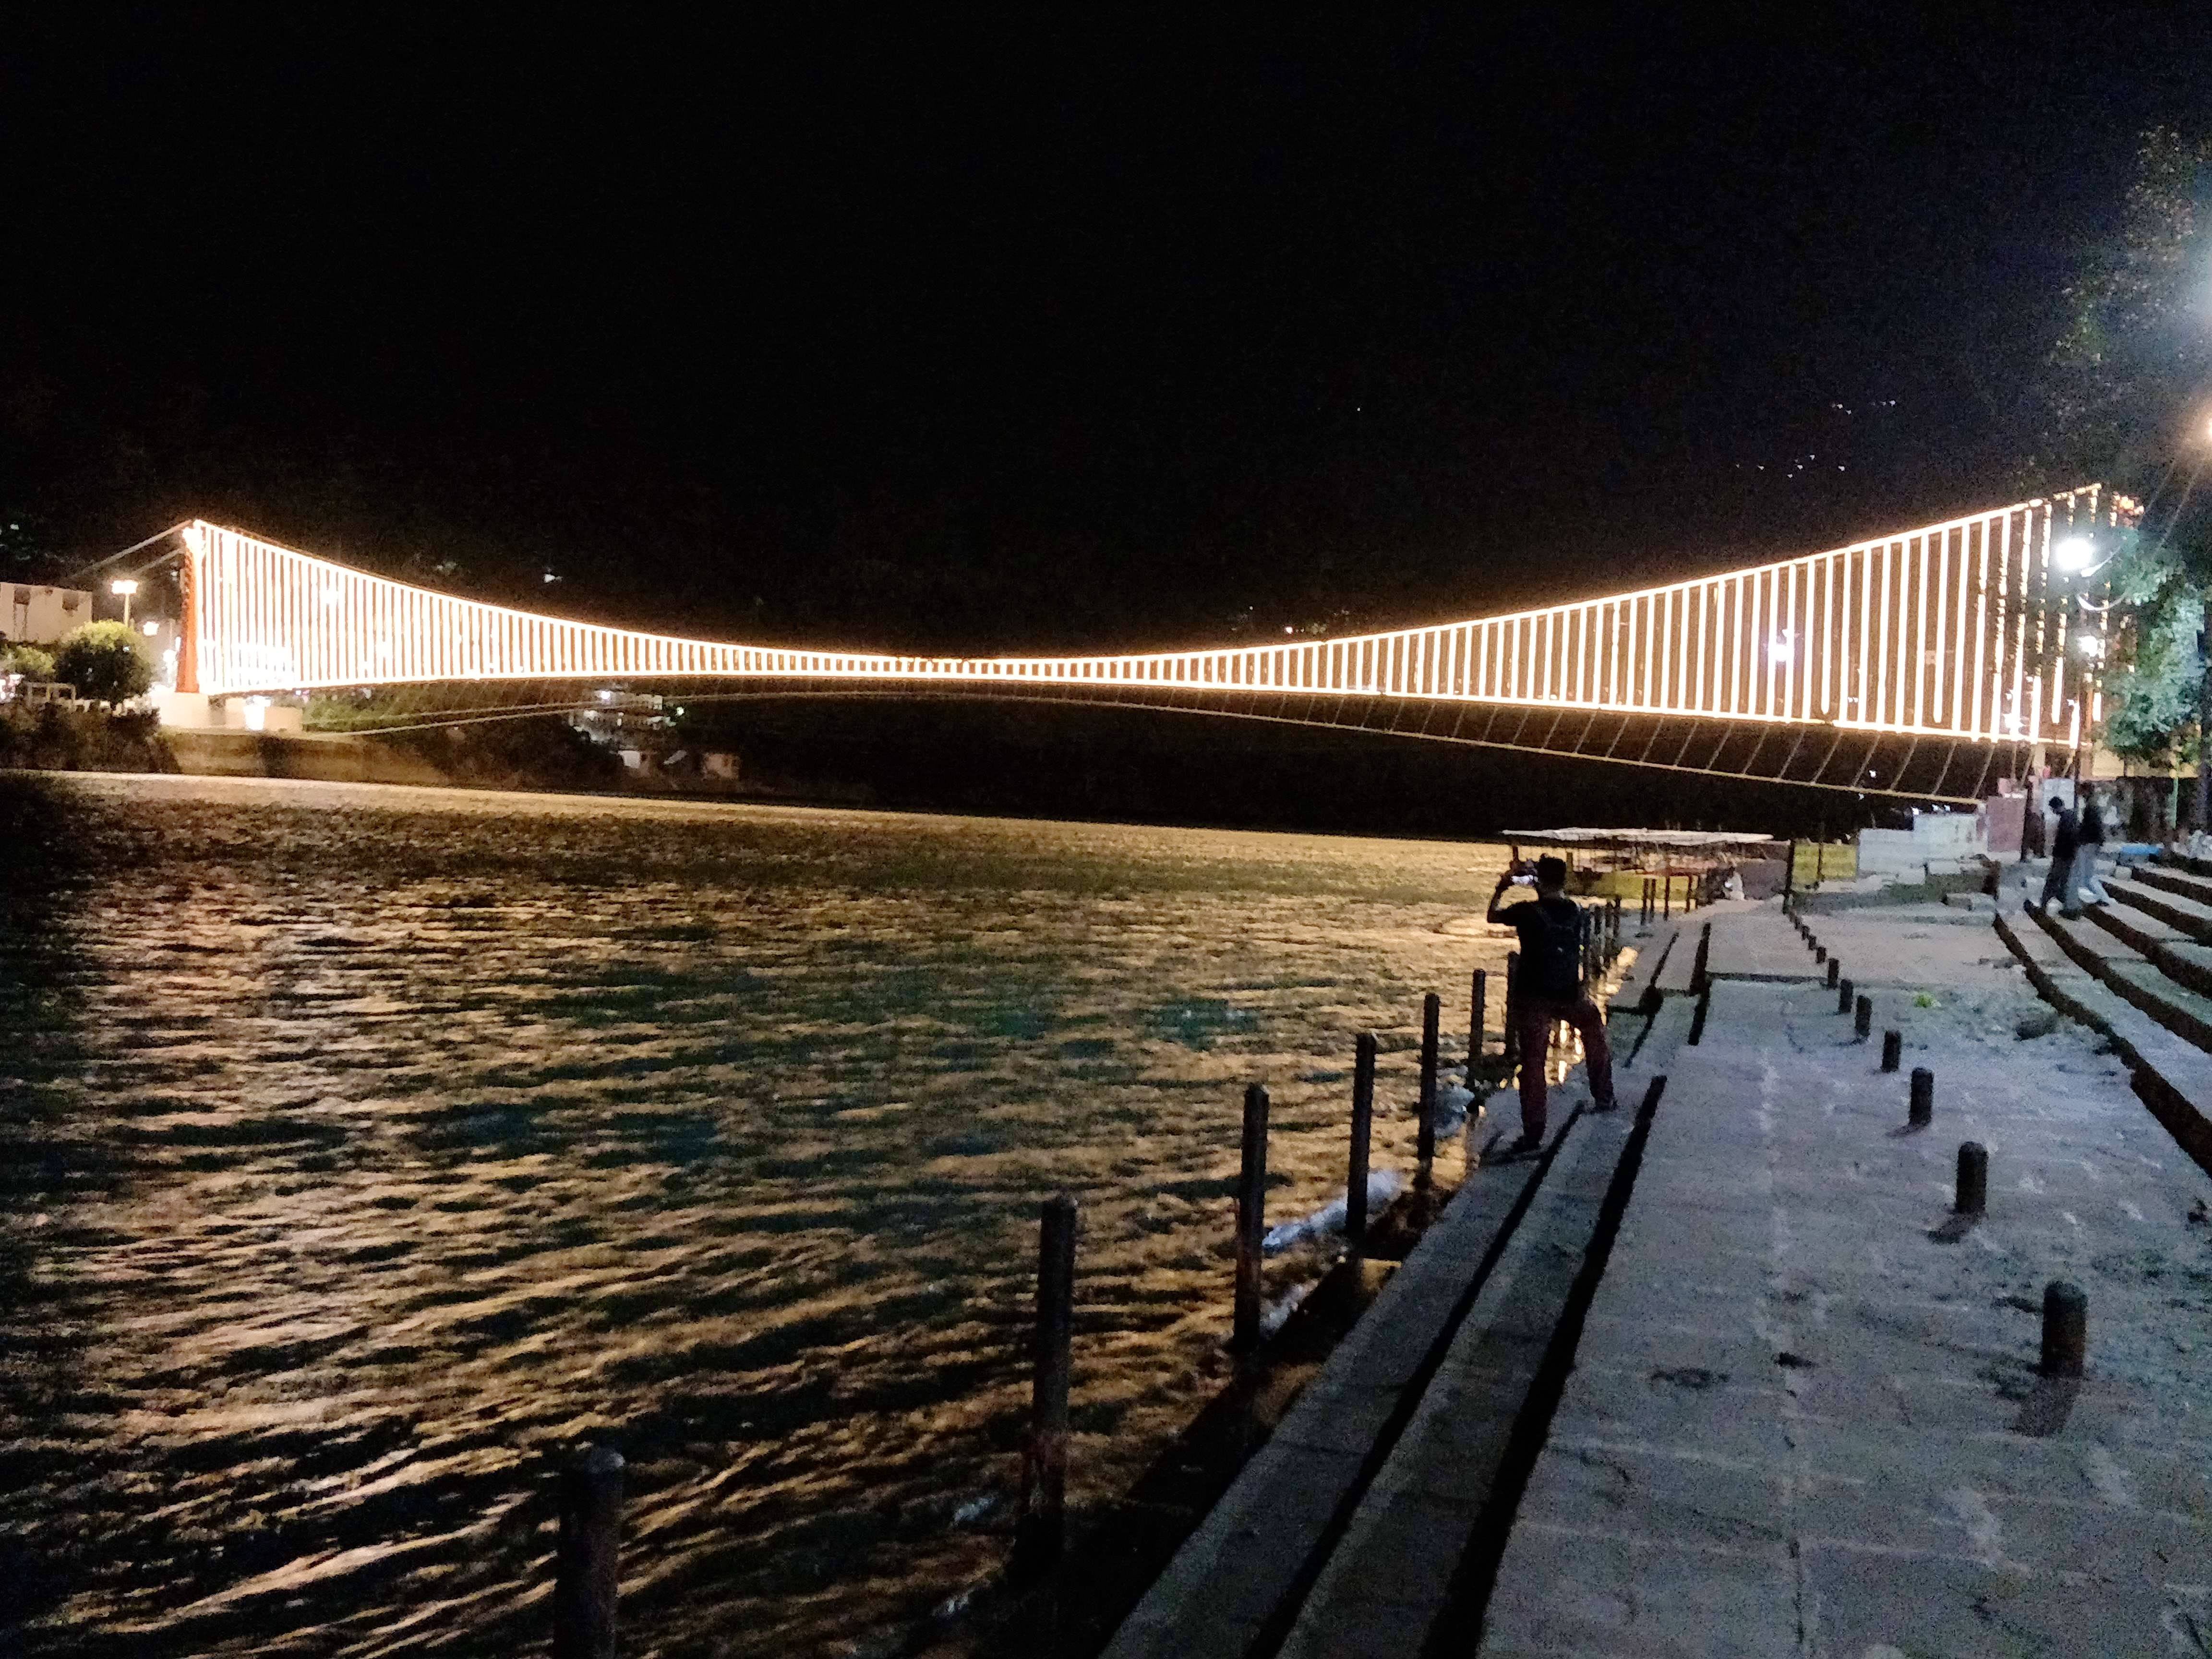 Night,Water,Bridge,Light,Sky,Architecture,Waterway,Suspension bridge,River,Fixed link